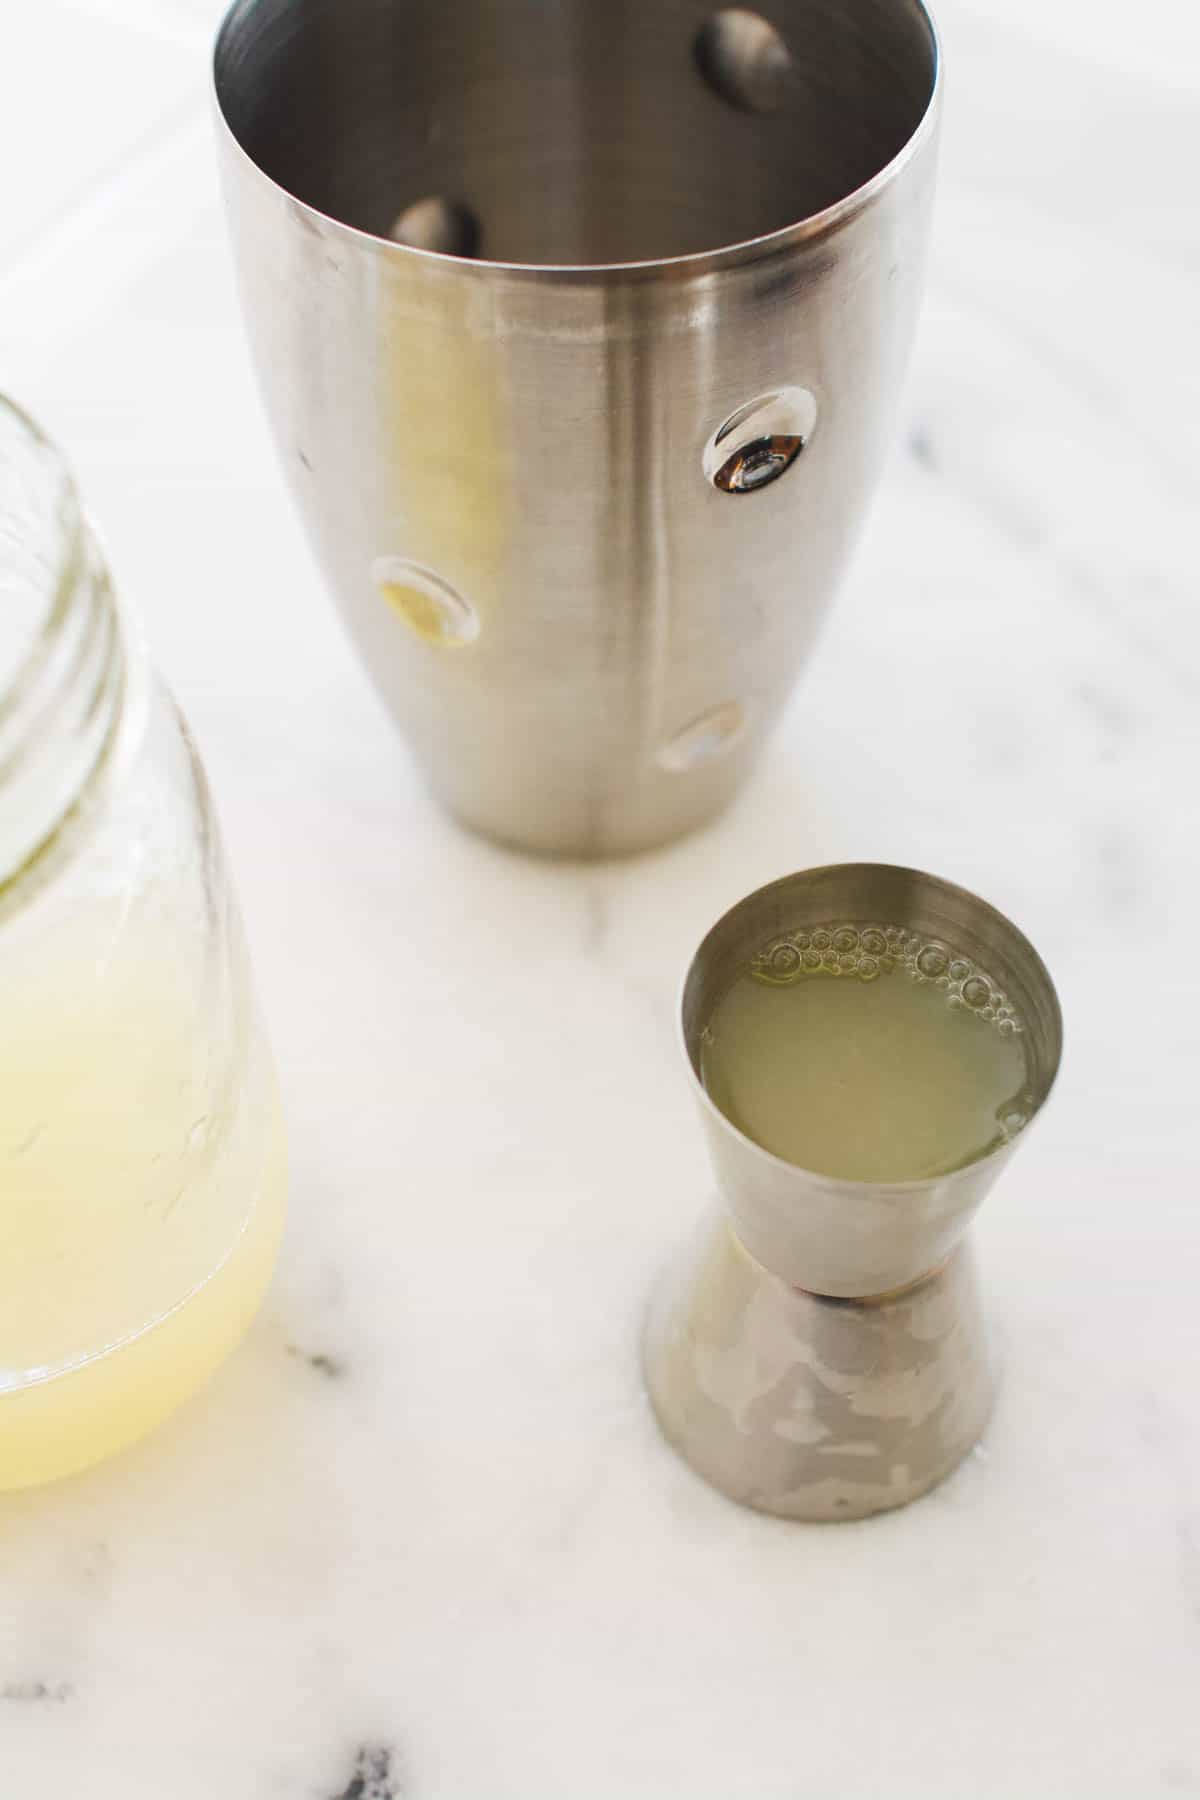 Jigger full of lemon juice next to a cocktail shaker.